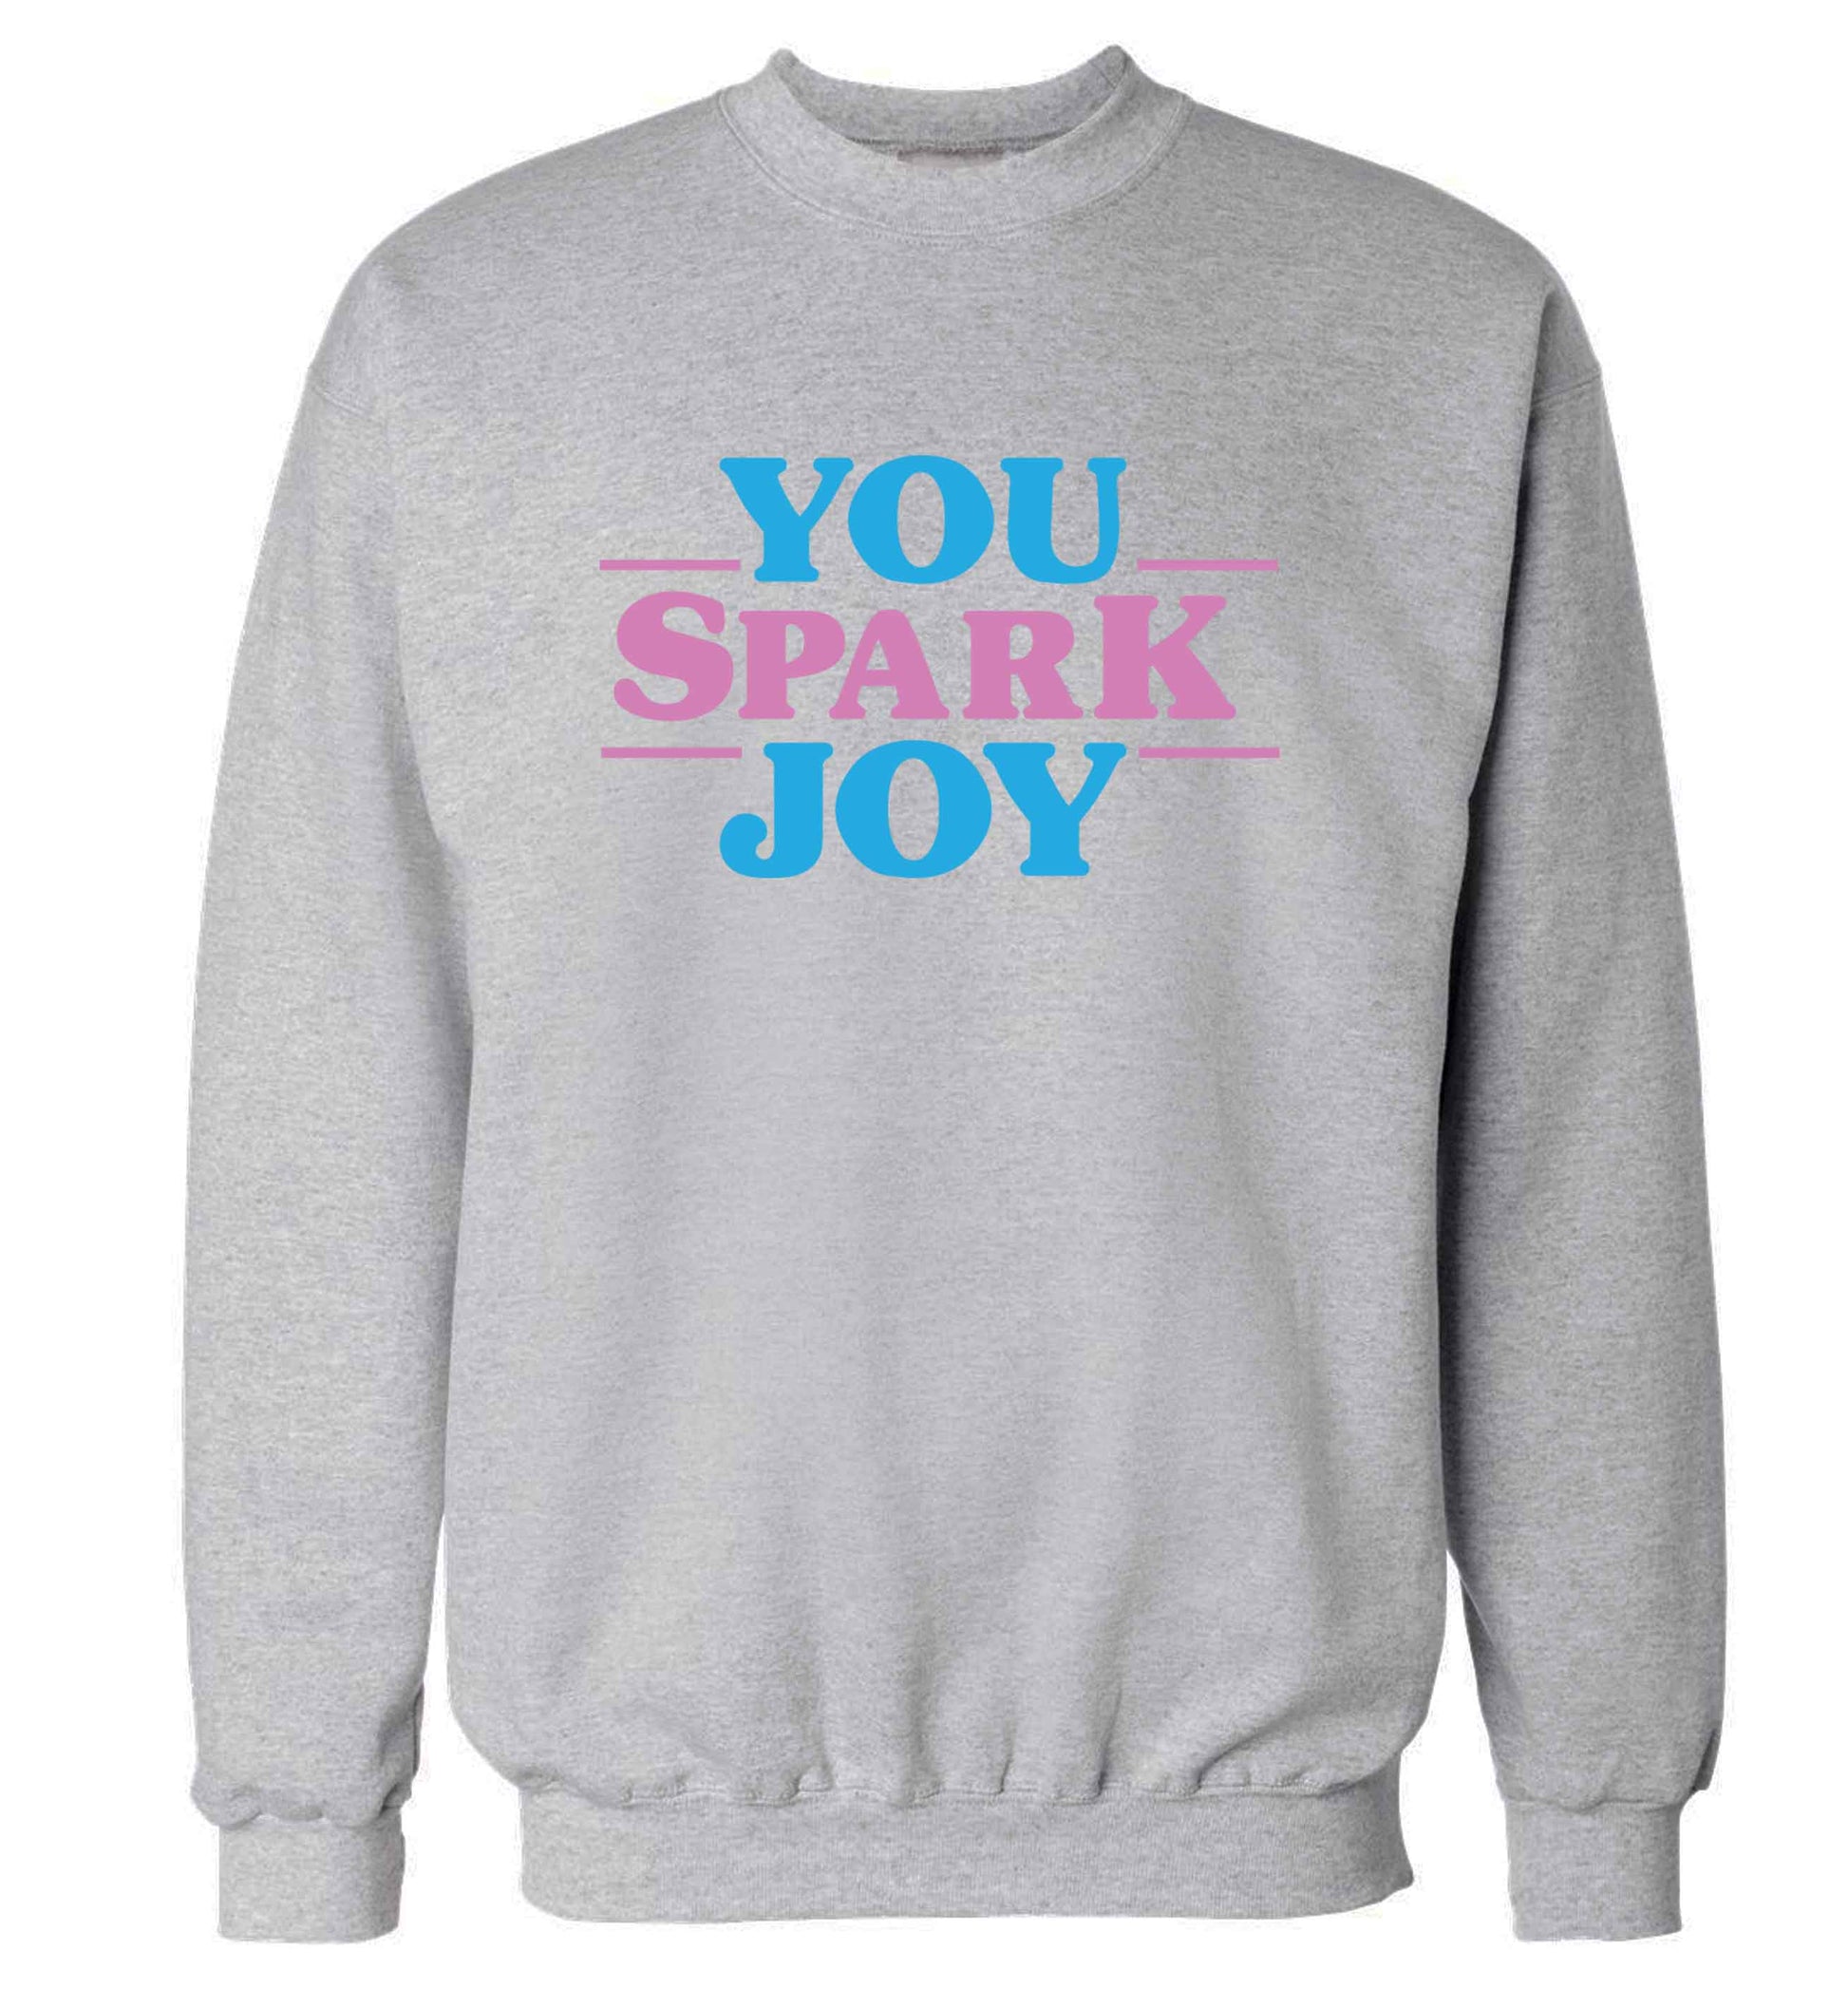 You spark joy adult's unisex grey sweater 2XL